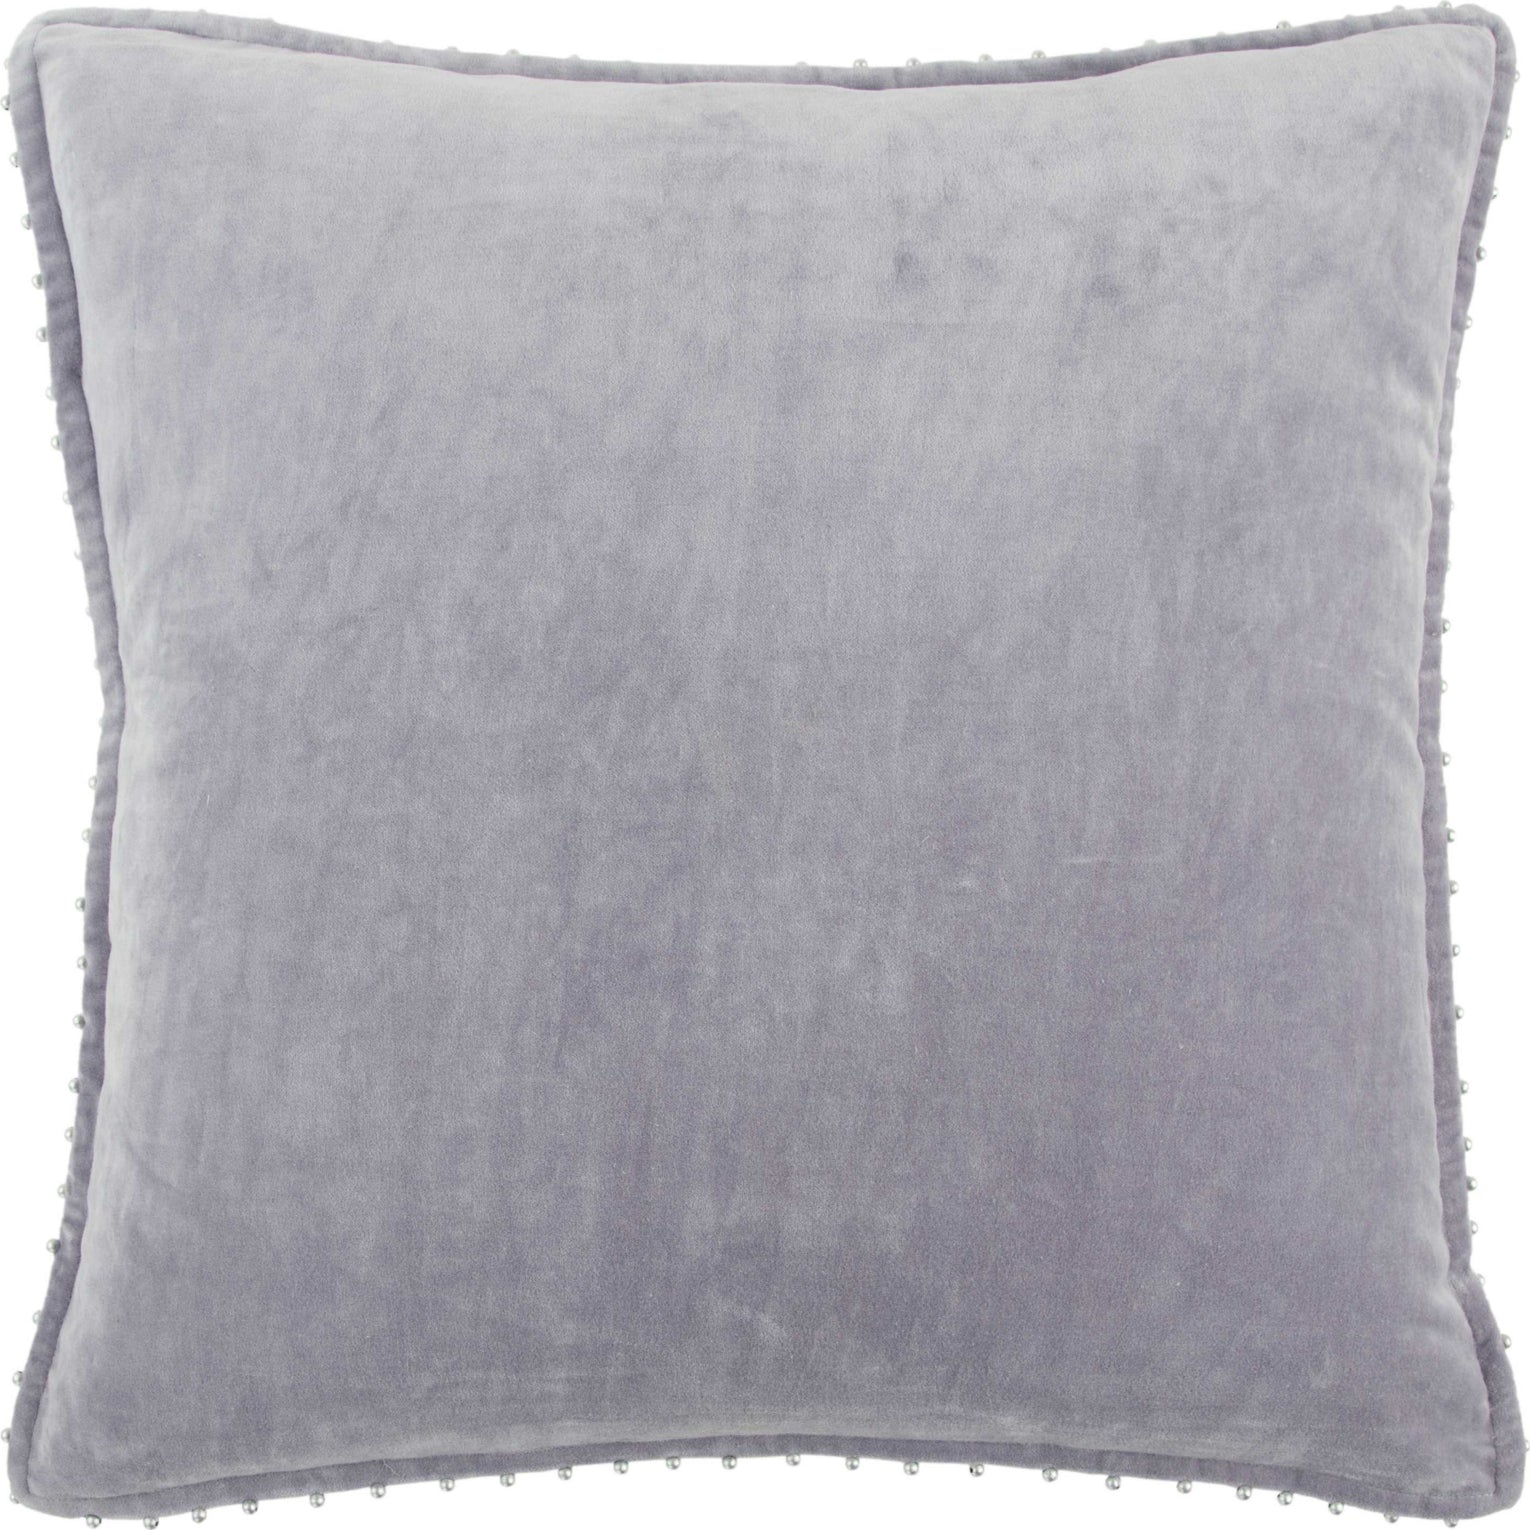 Rizzy Pillows T13196 Gray